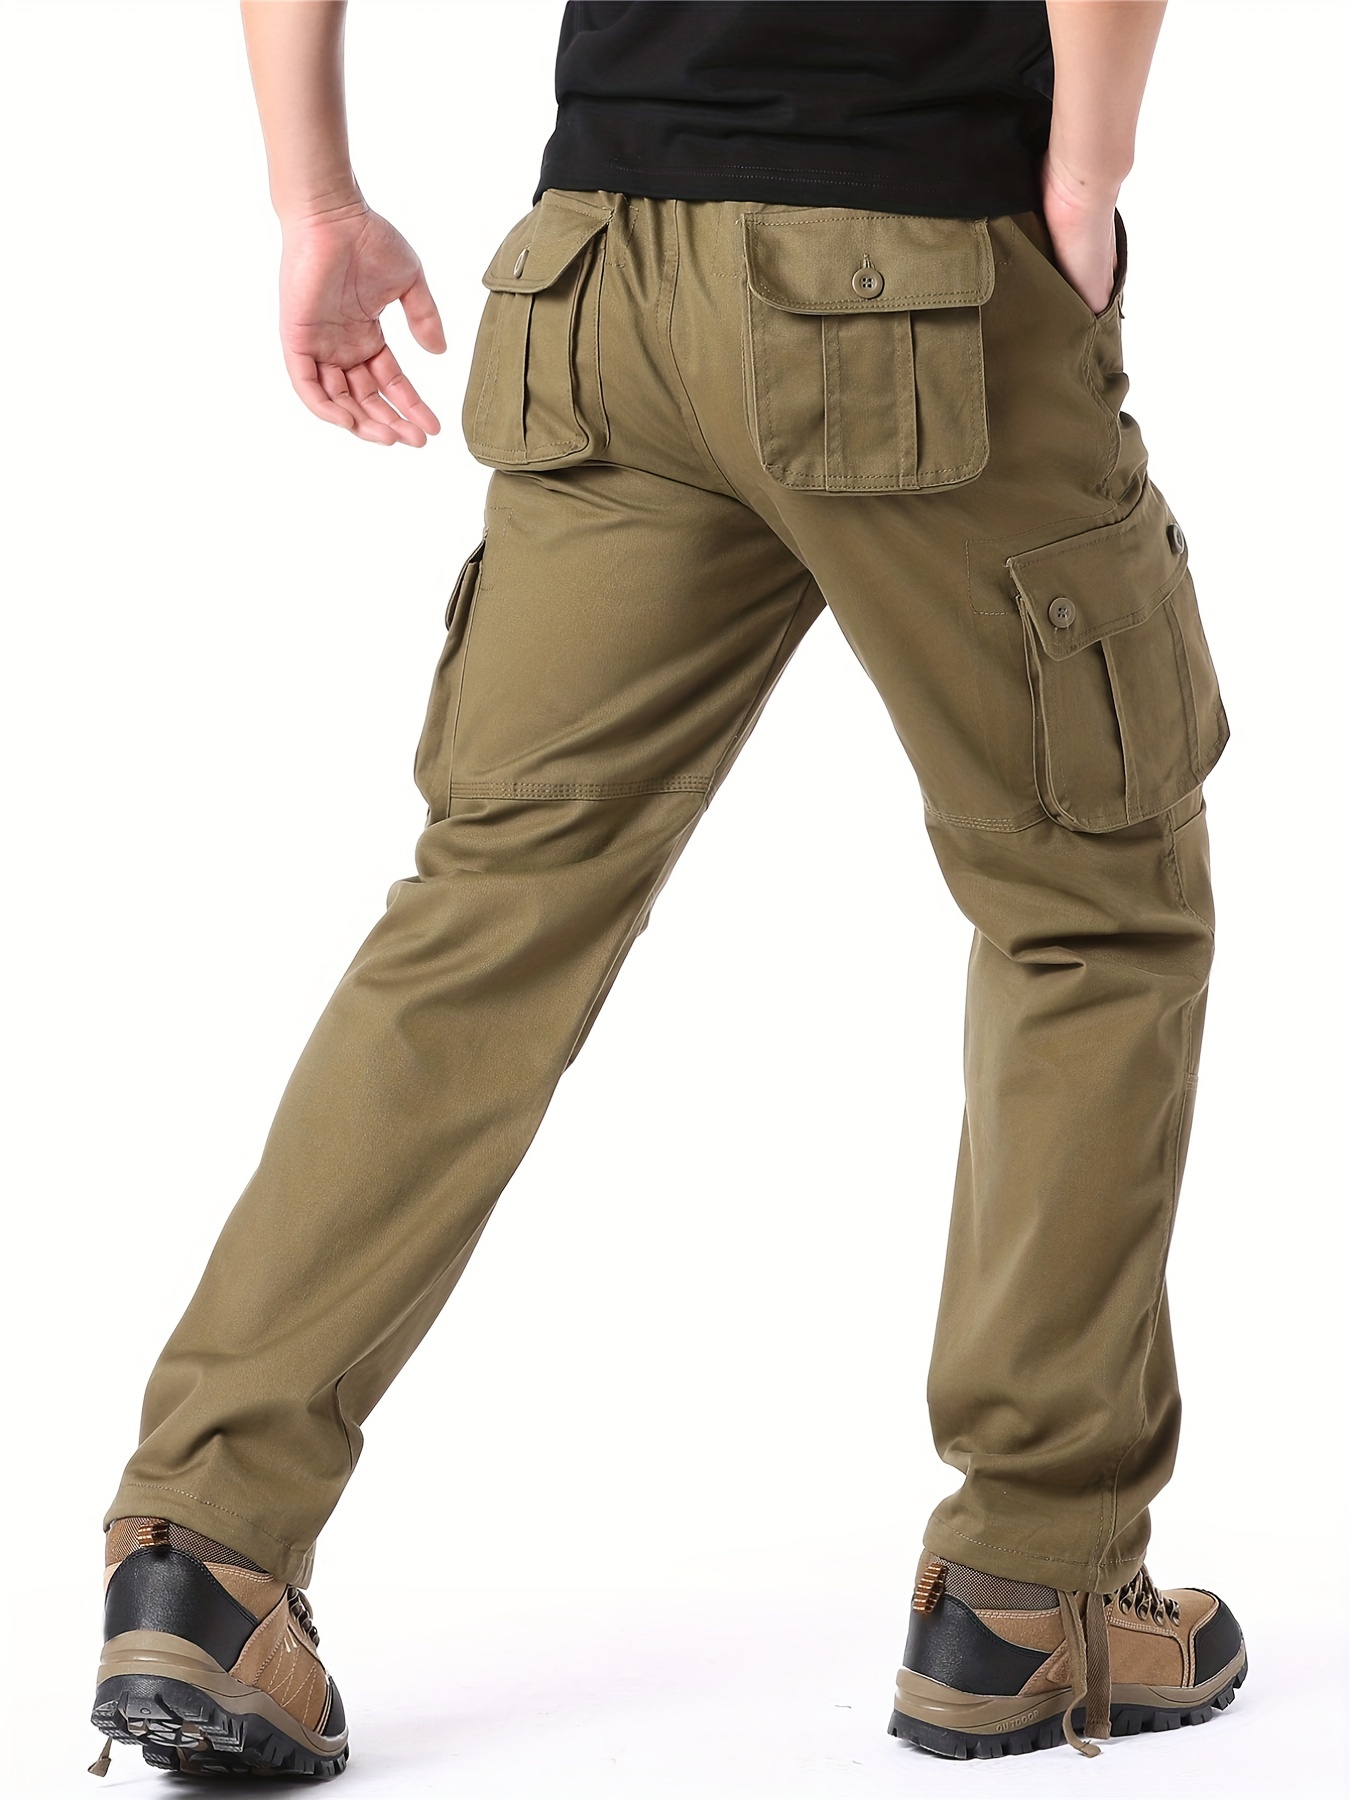 Spring Men's Cargo Pants - Tactical Multi-pocket - Cotton